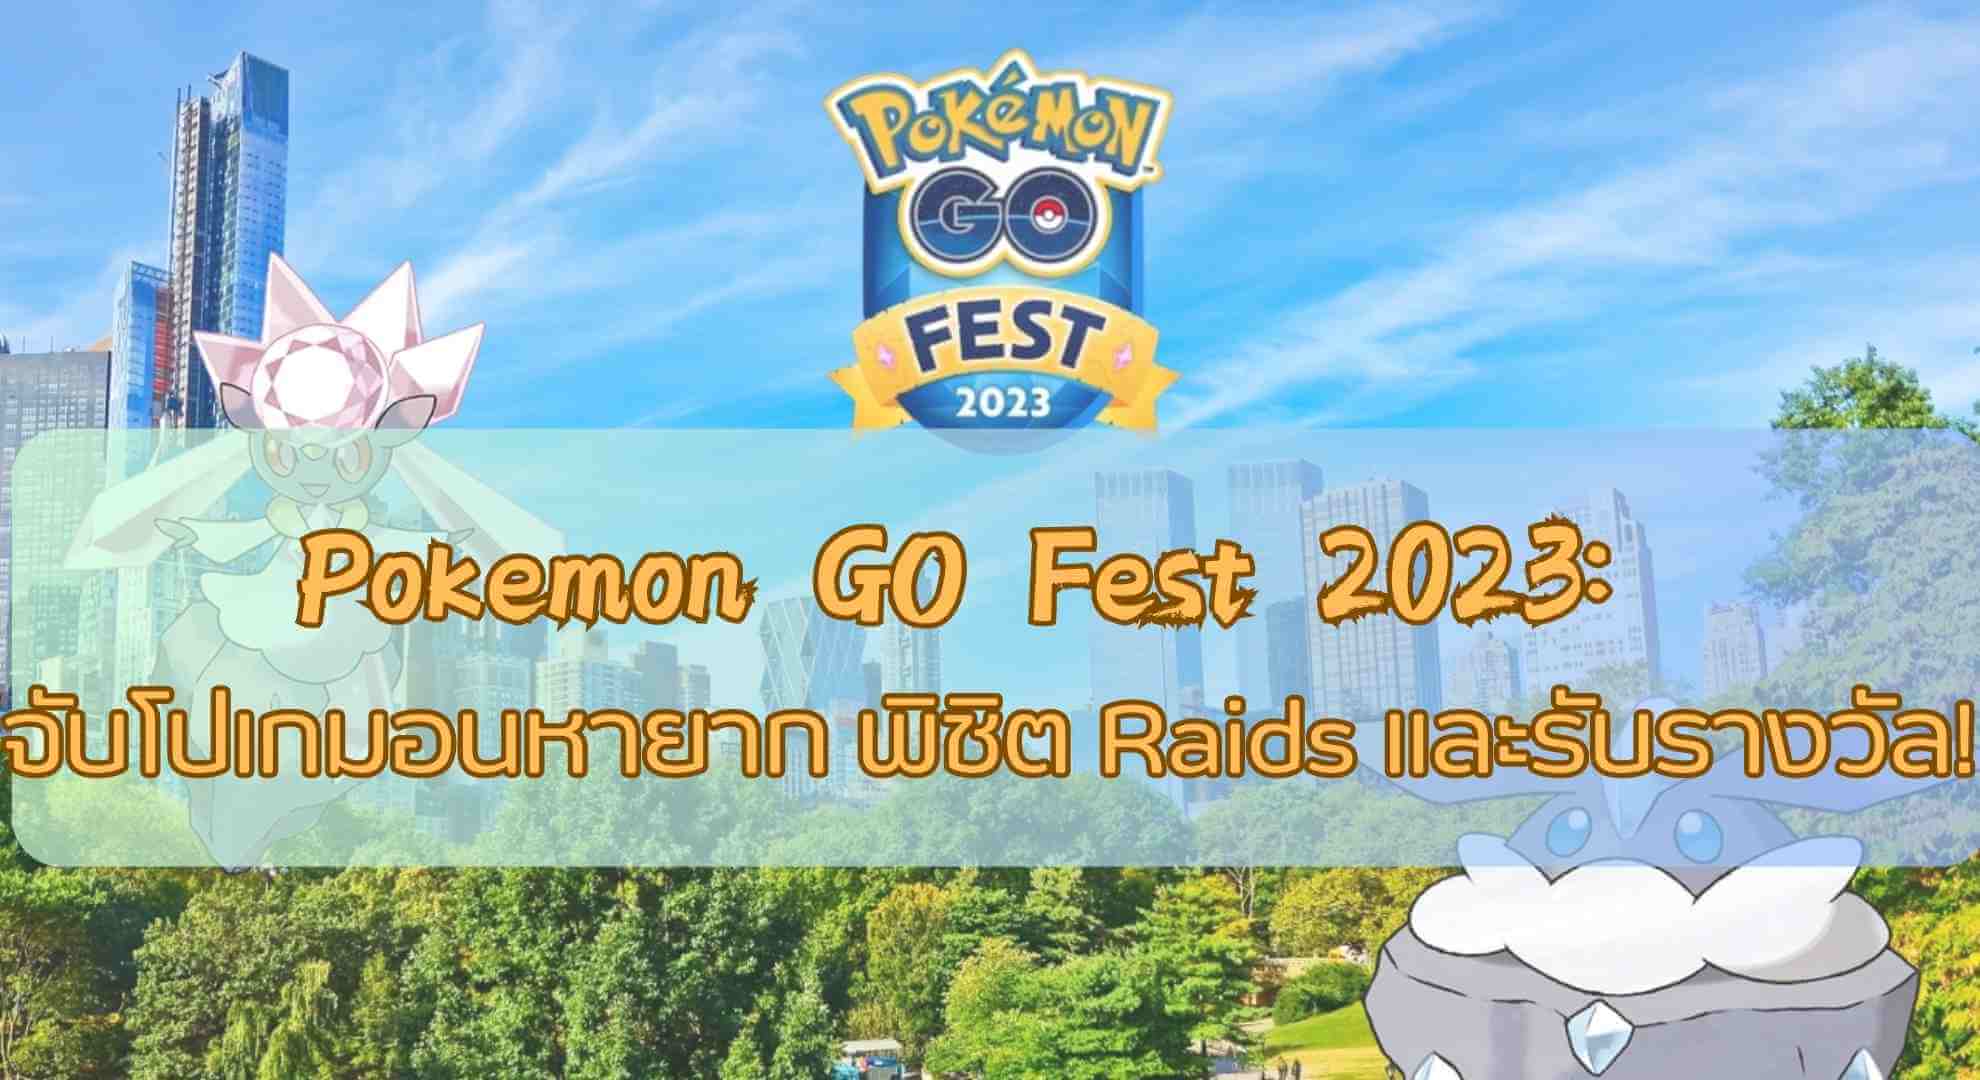 Pokemon GO Fest 2023: จับโปเกมอนหายาก พิชิต Raids และรับรางวัล!